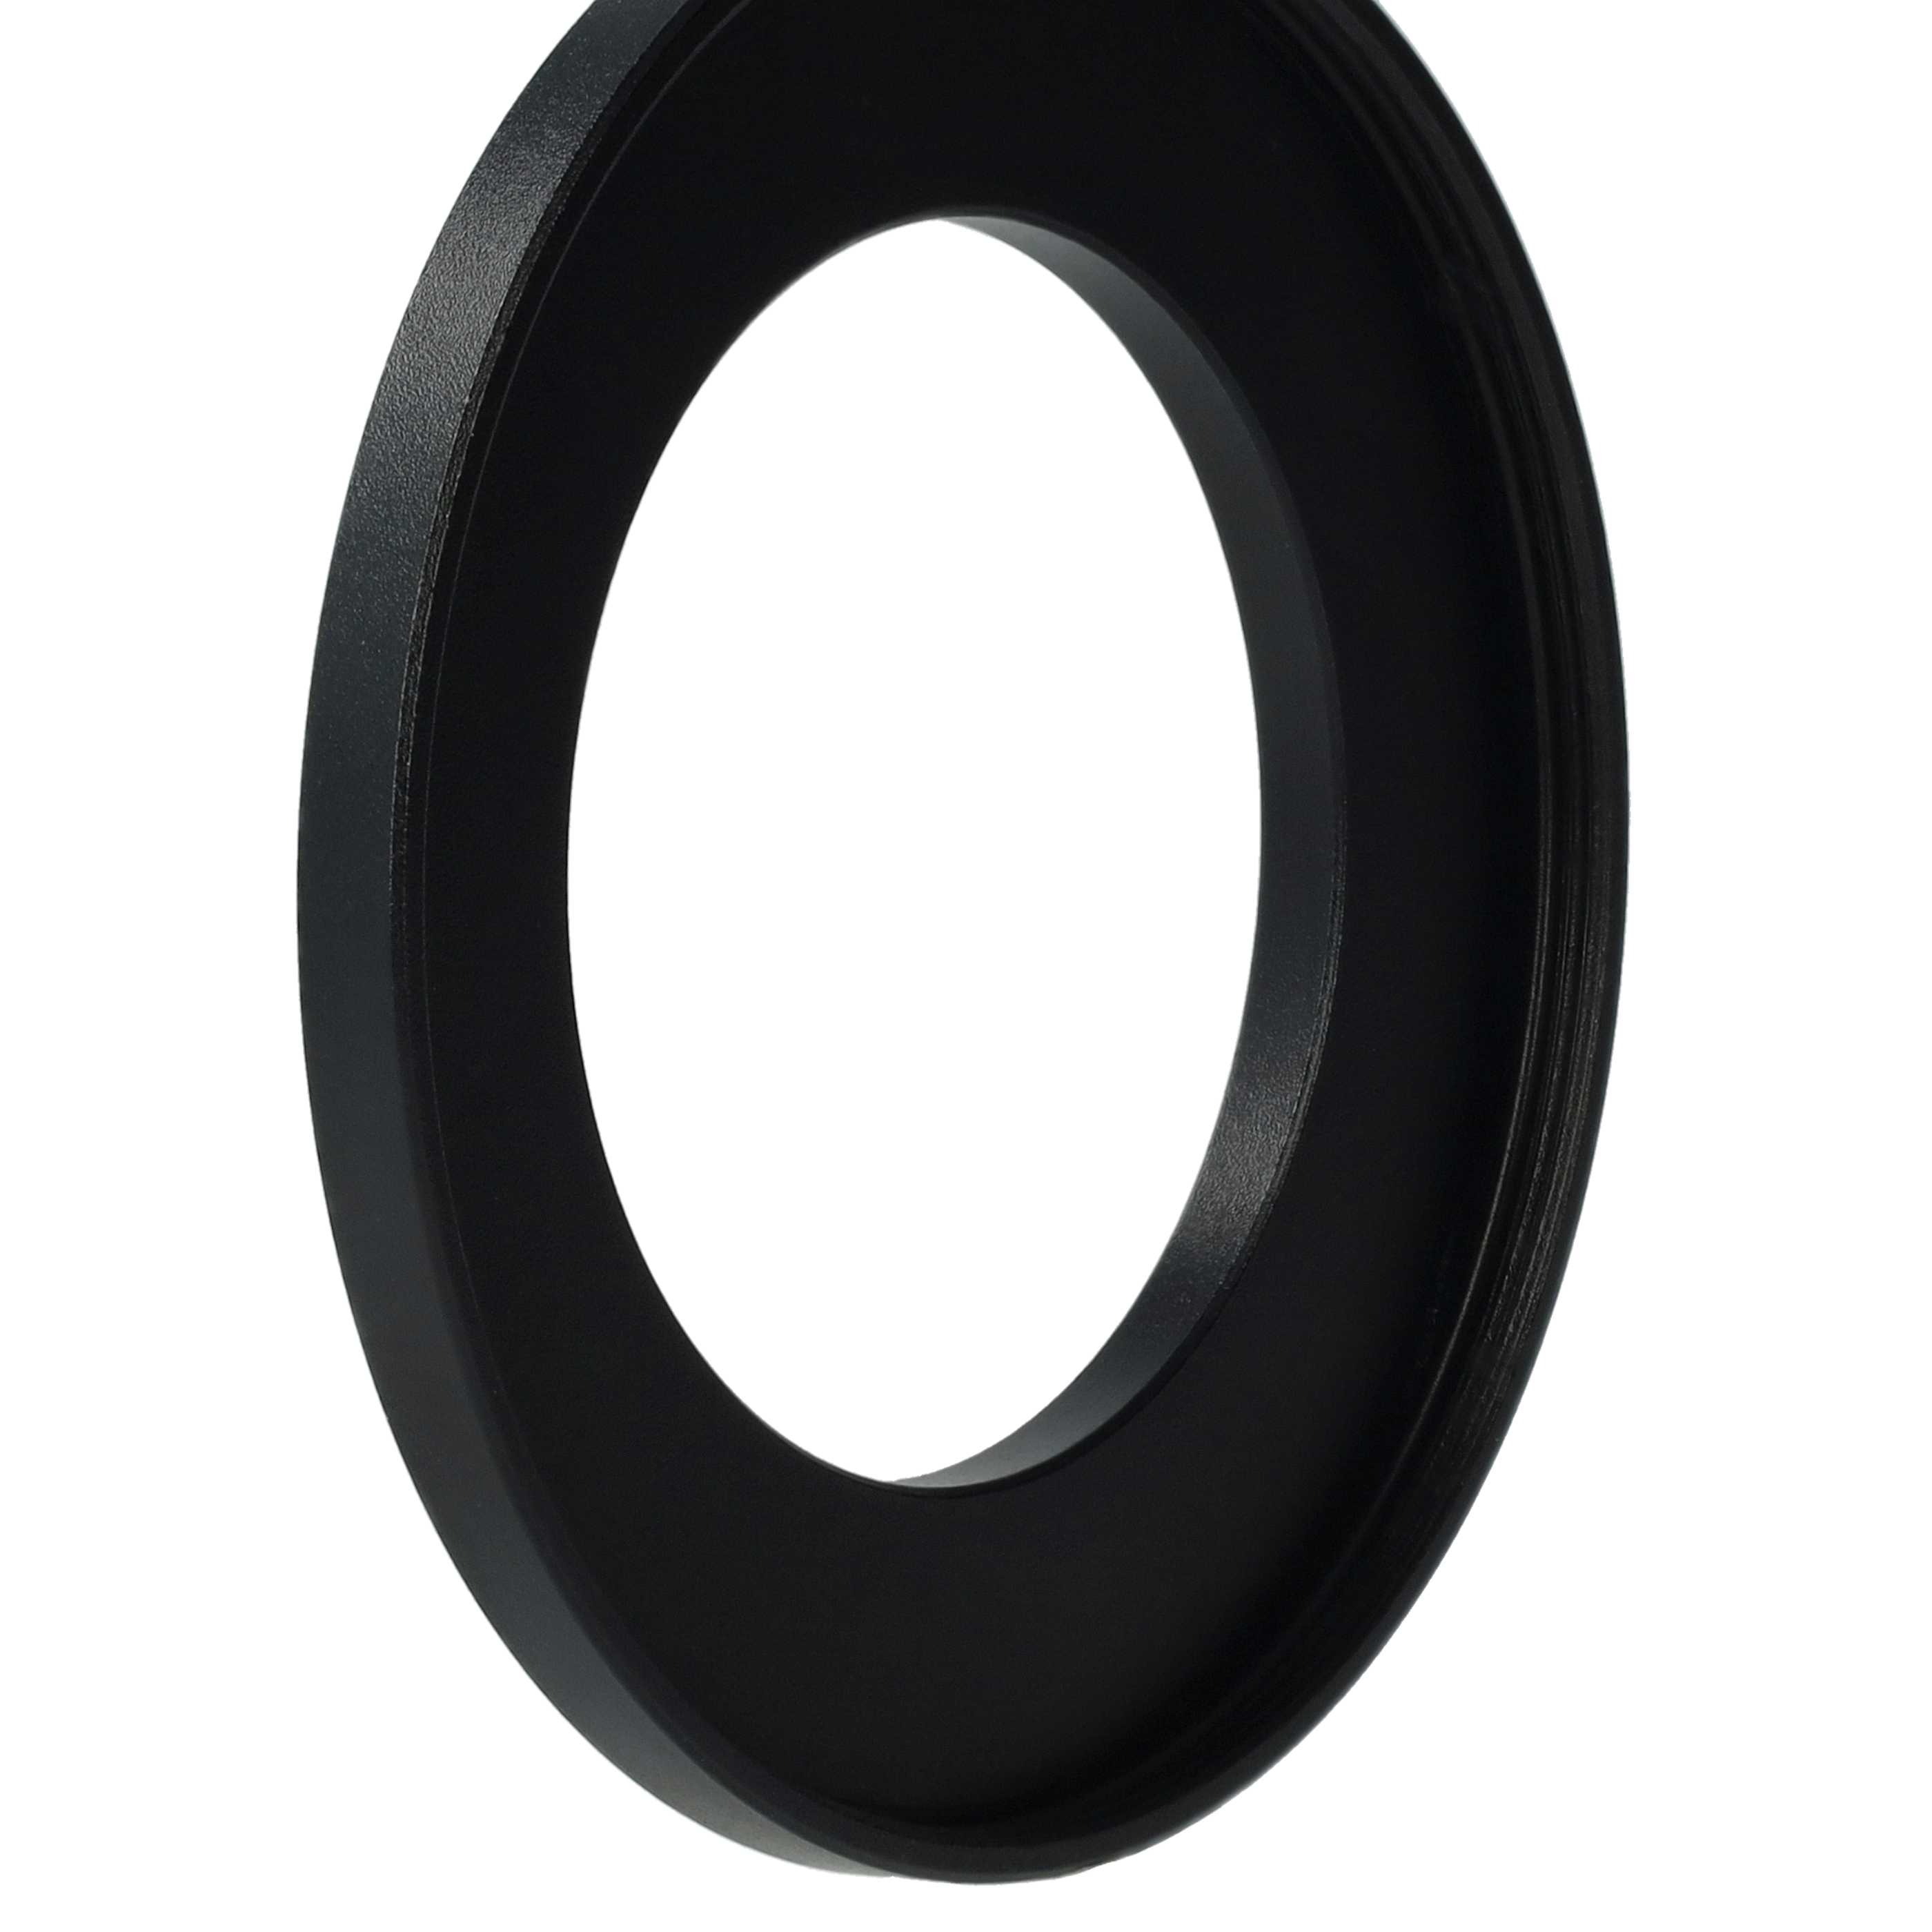 Anillo adaptador step up 40,5 mm a 58 mm para diversos objetivos - Adaptador filtro